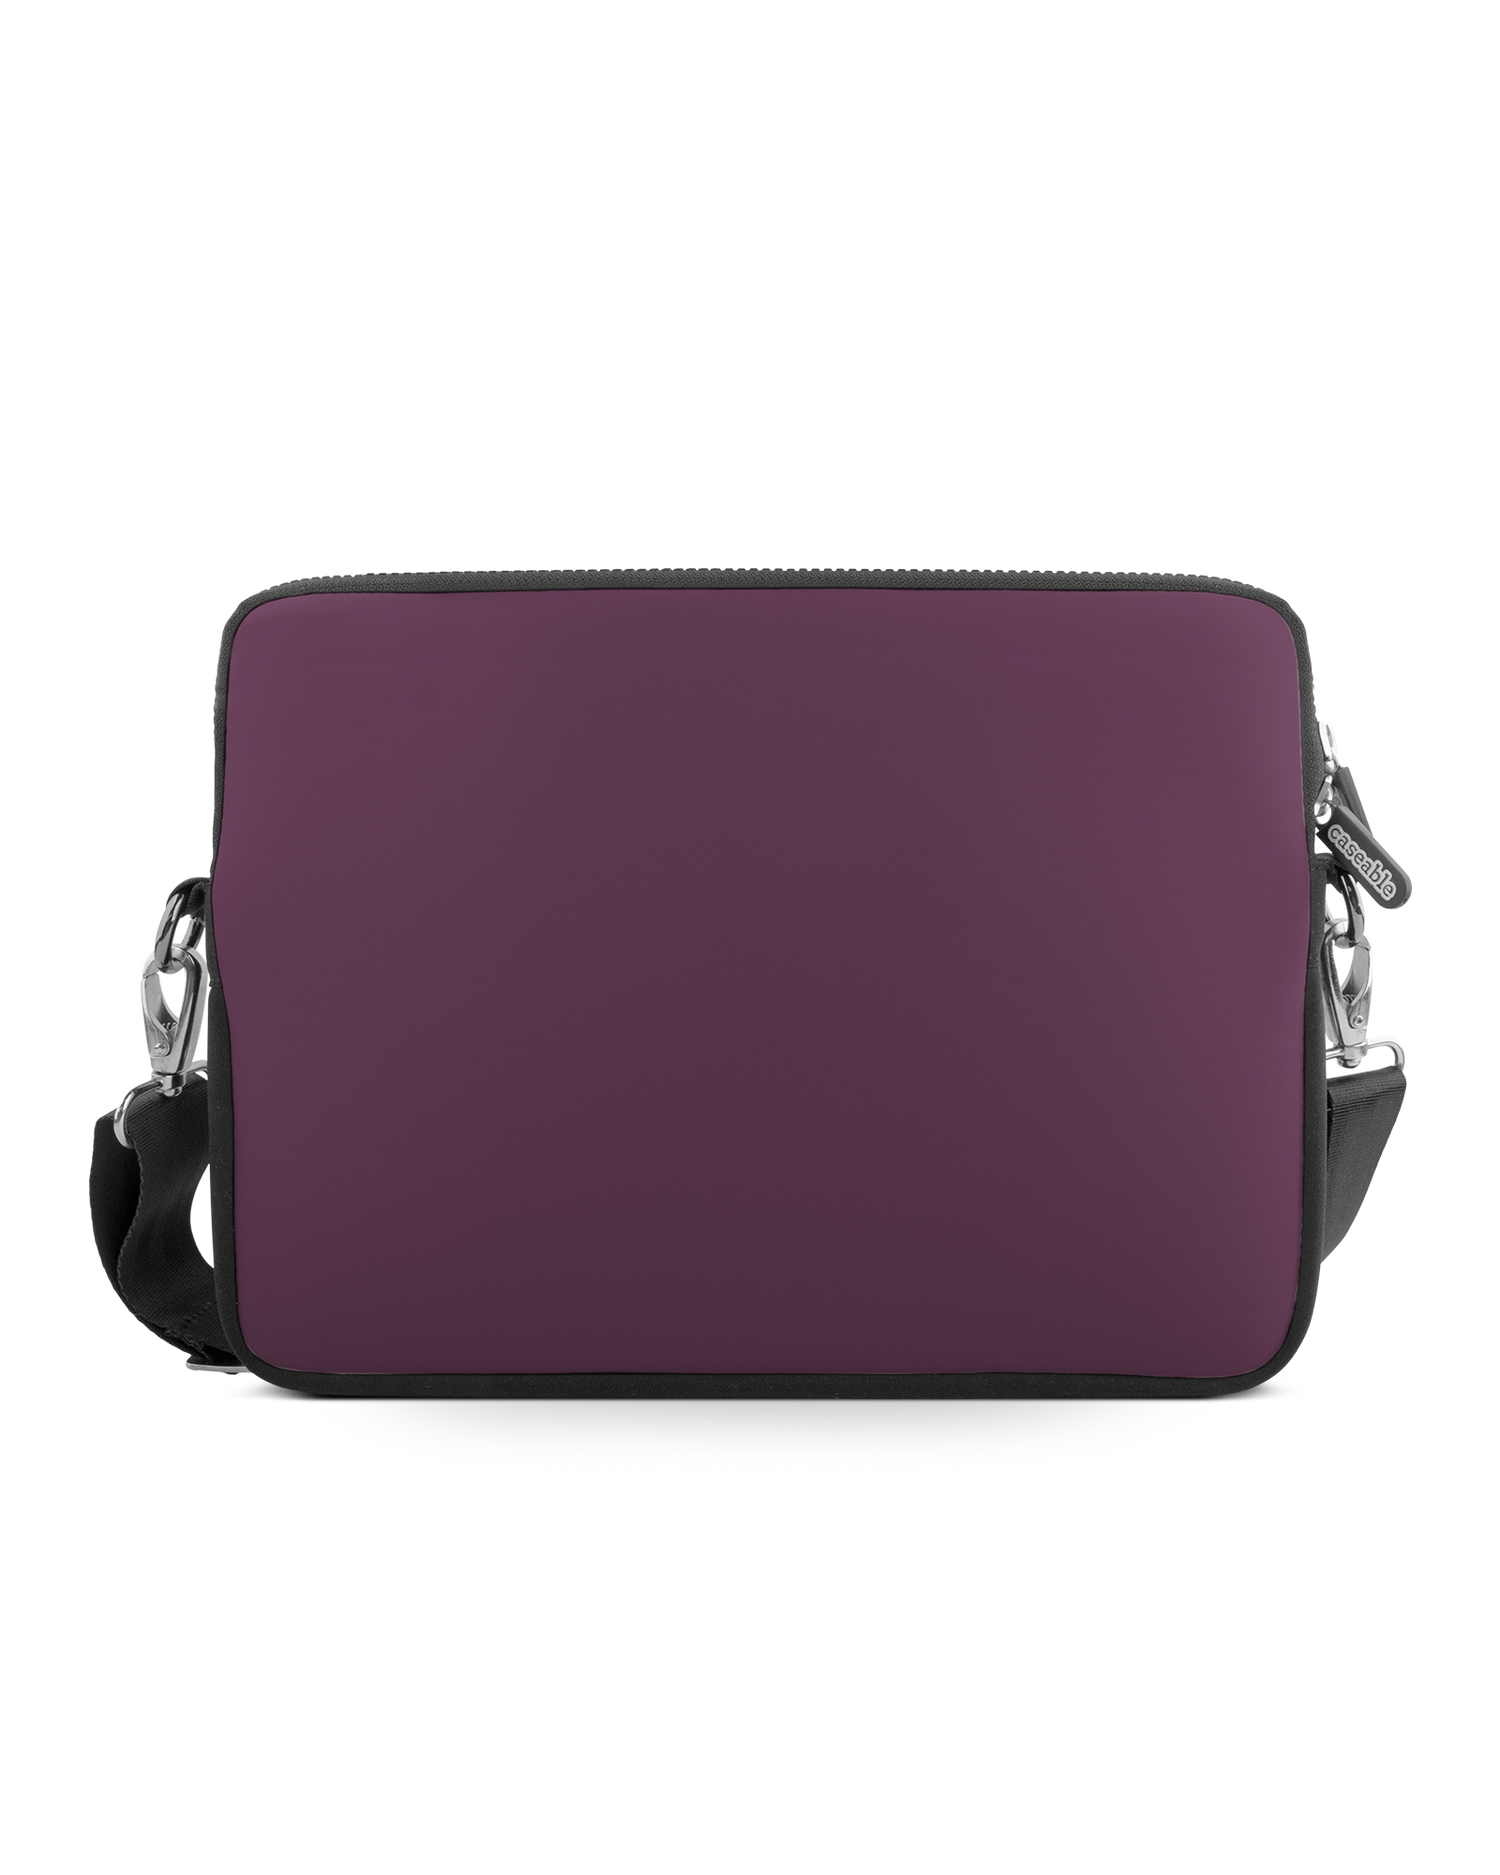 PLUM Premium Laptop Bag 17 inch: Front View